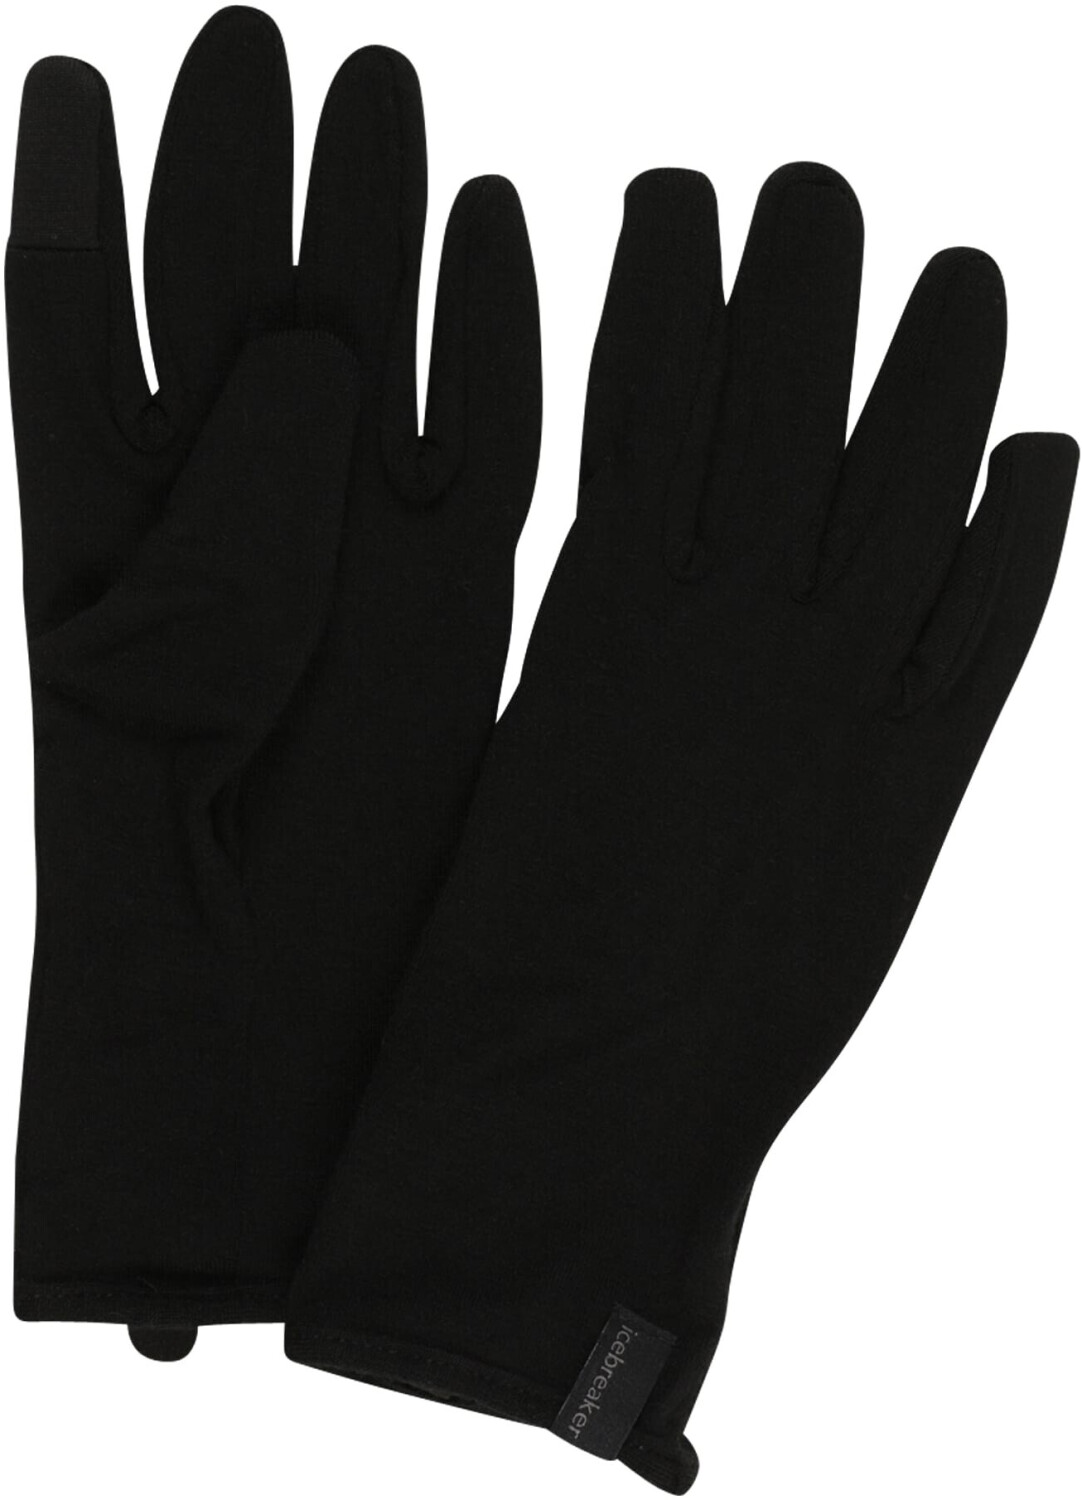 Icebreaker Adult 260 Tech Glove liner black ab 23,95 €